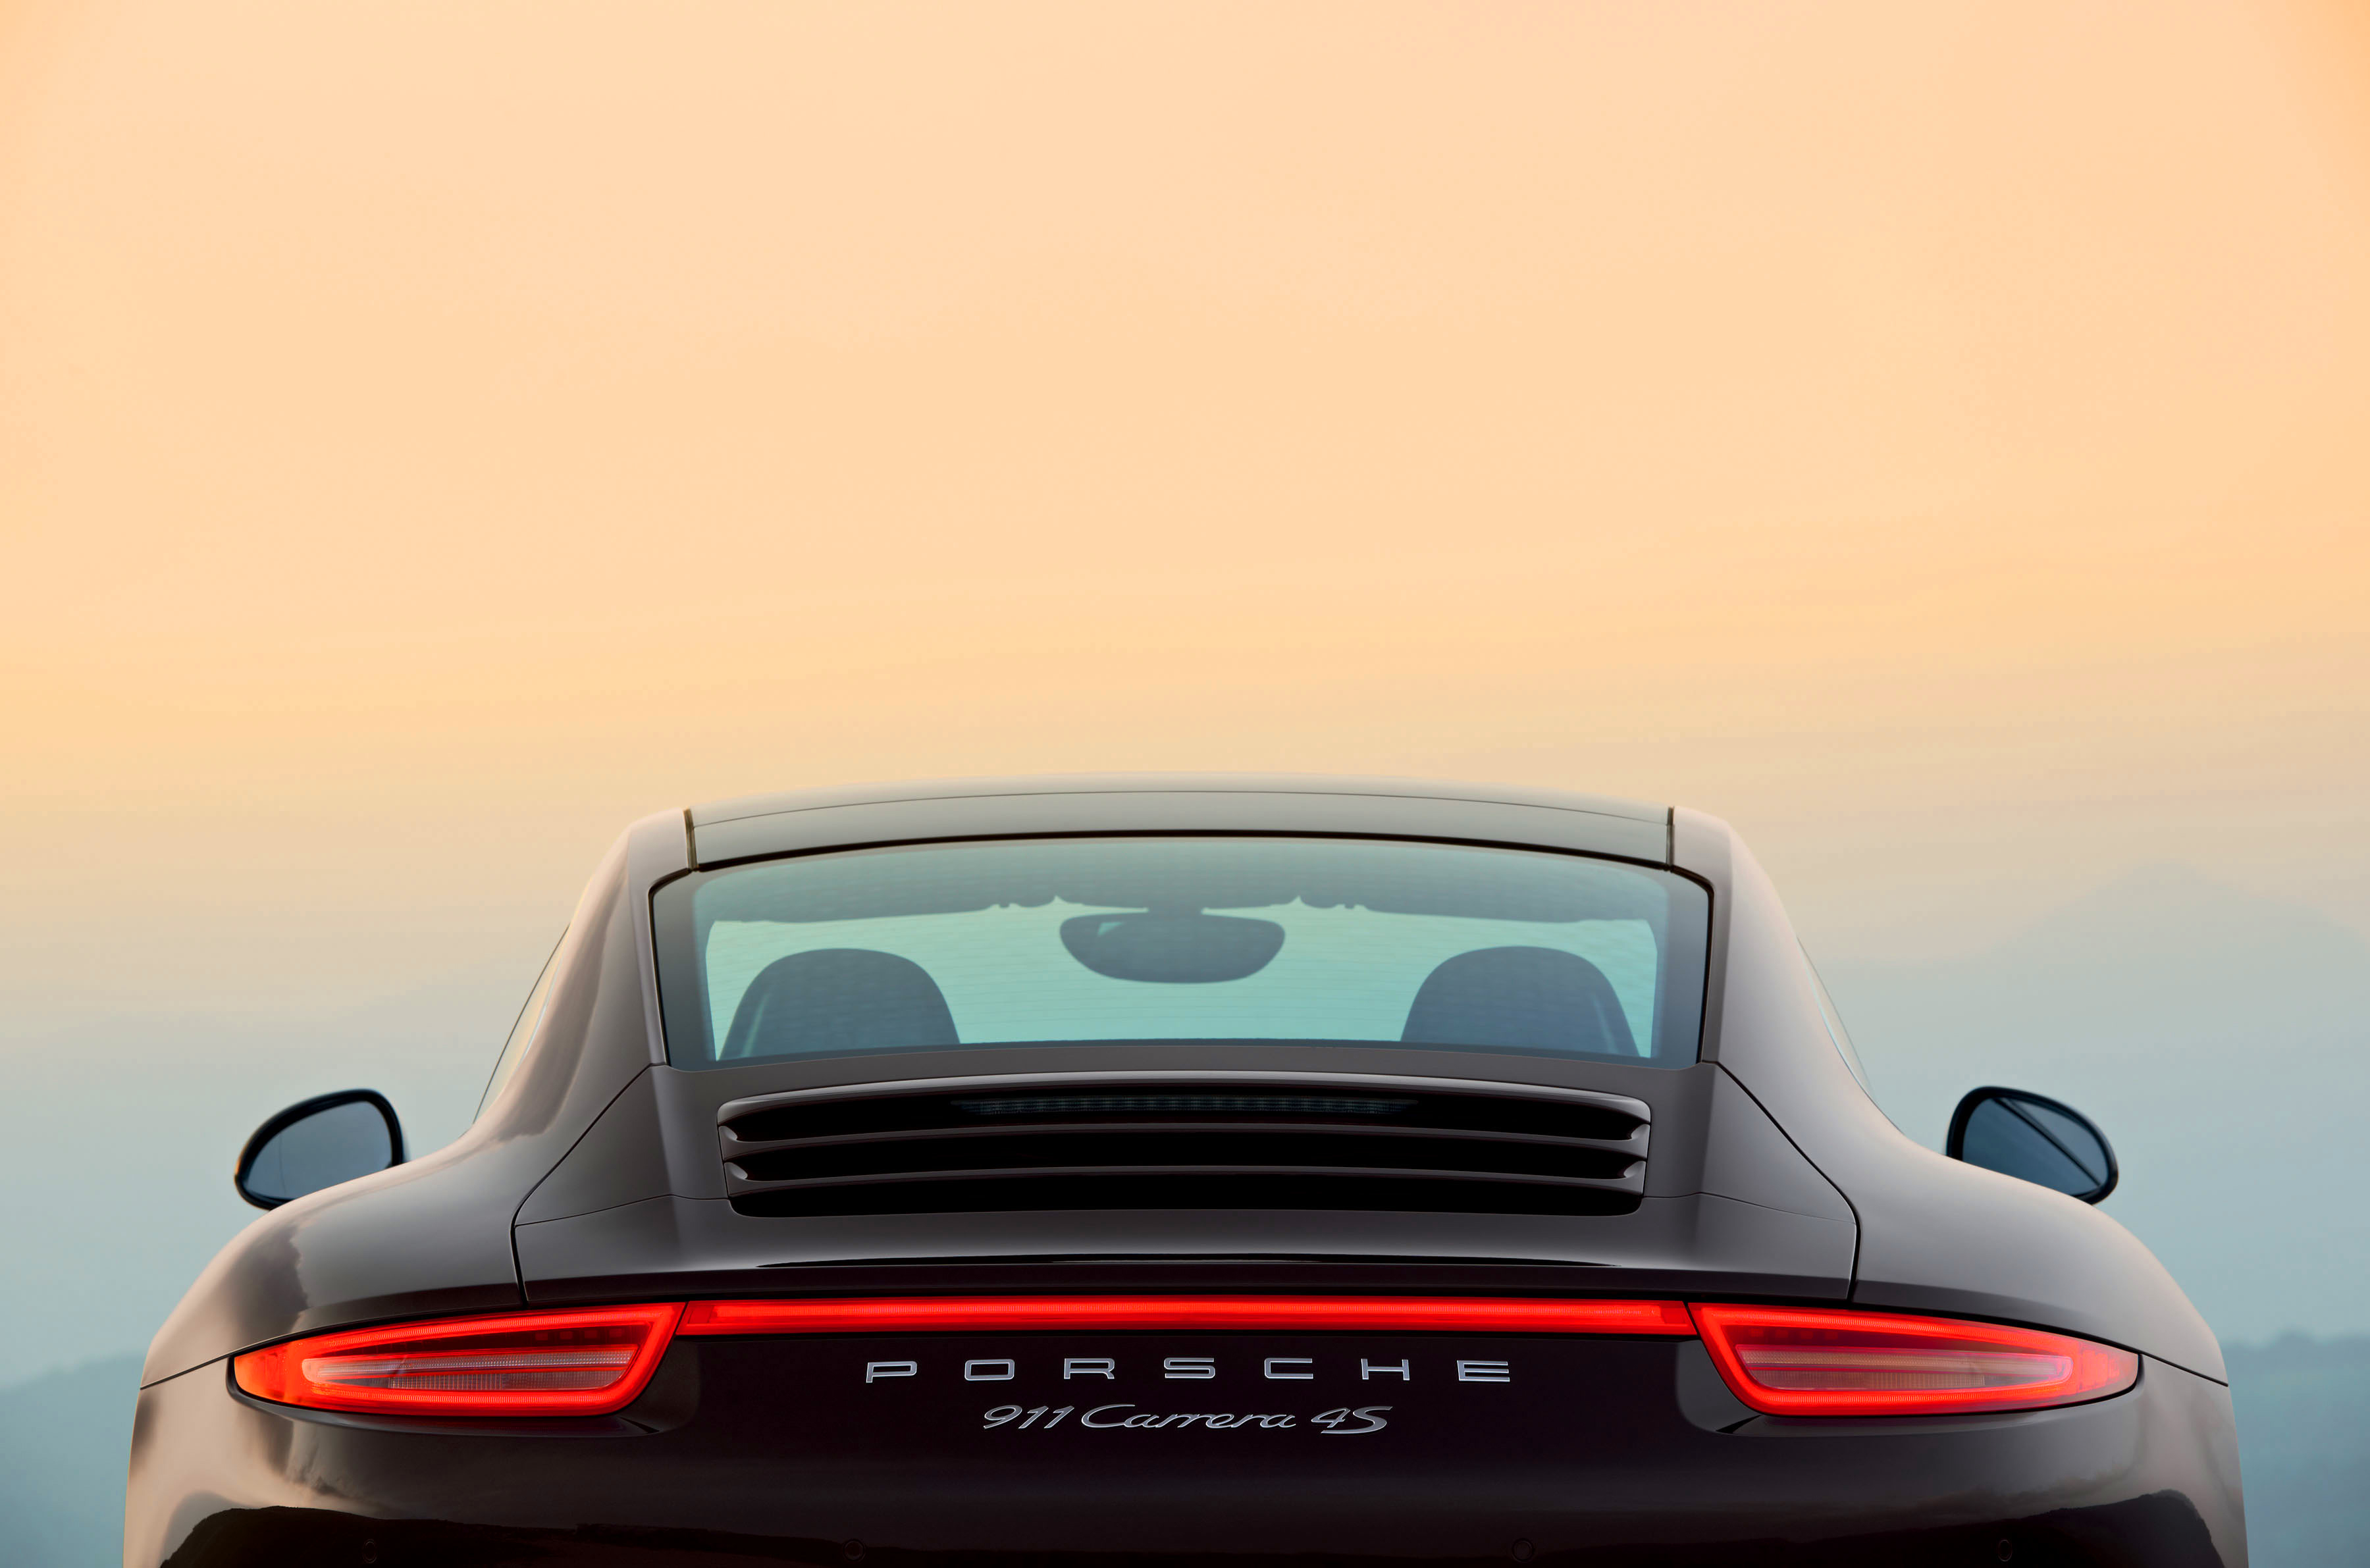 Porsche images Porsche 911 Carrera 4S HD wallpaper and background